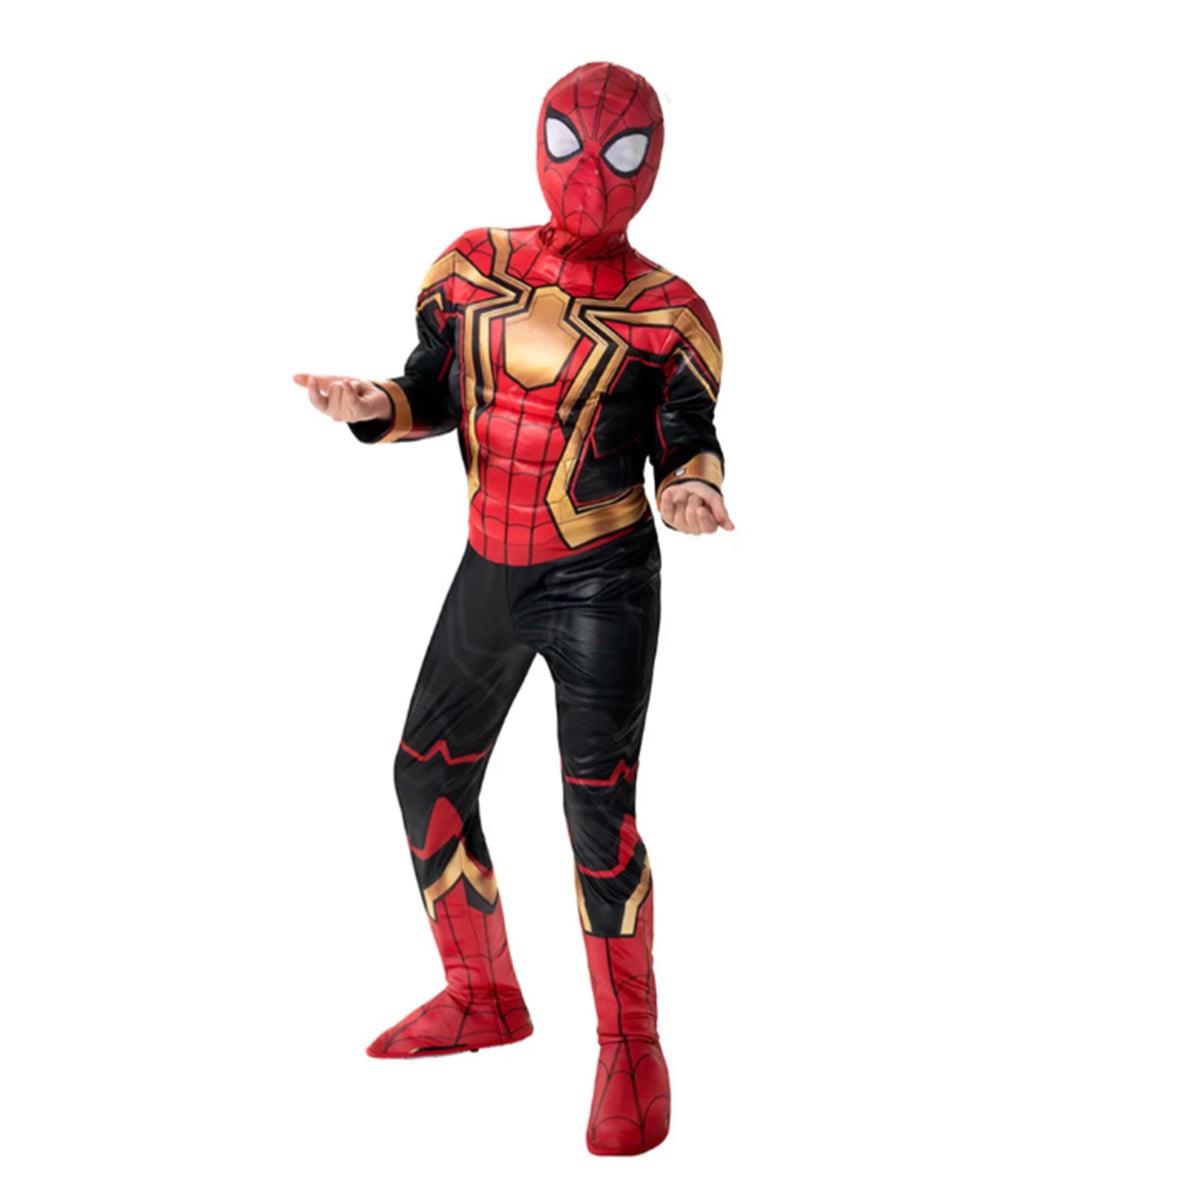 Costume de Spider-Man pour enfants, Marvel Spider-Man